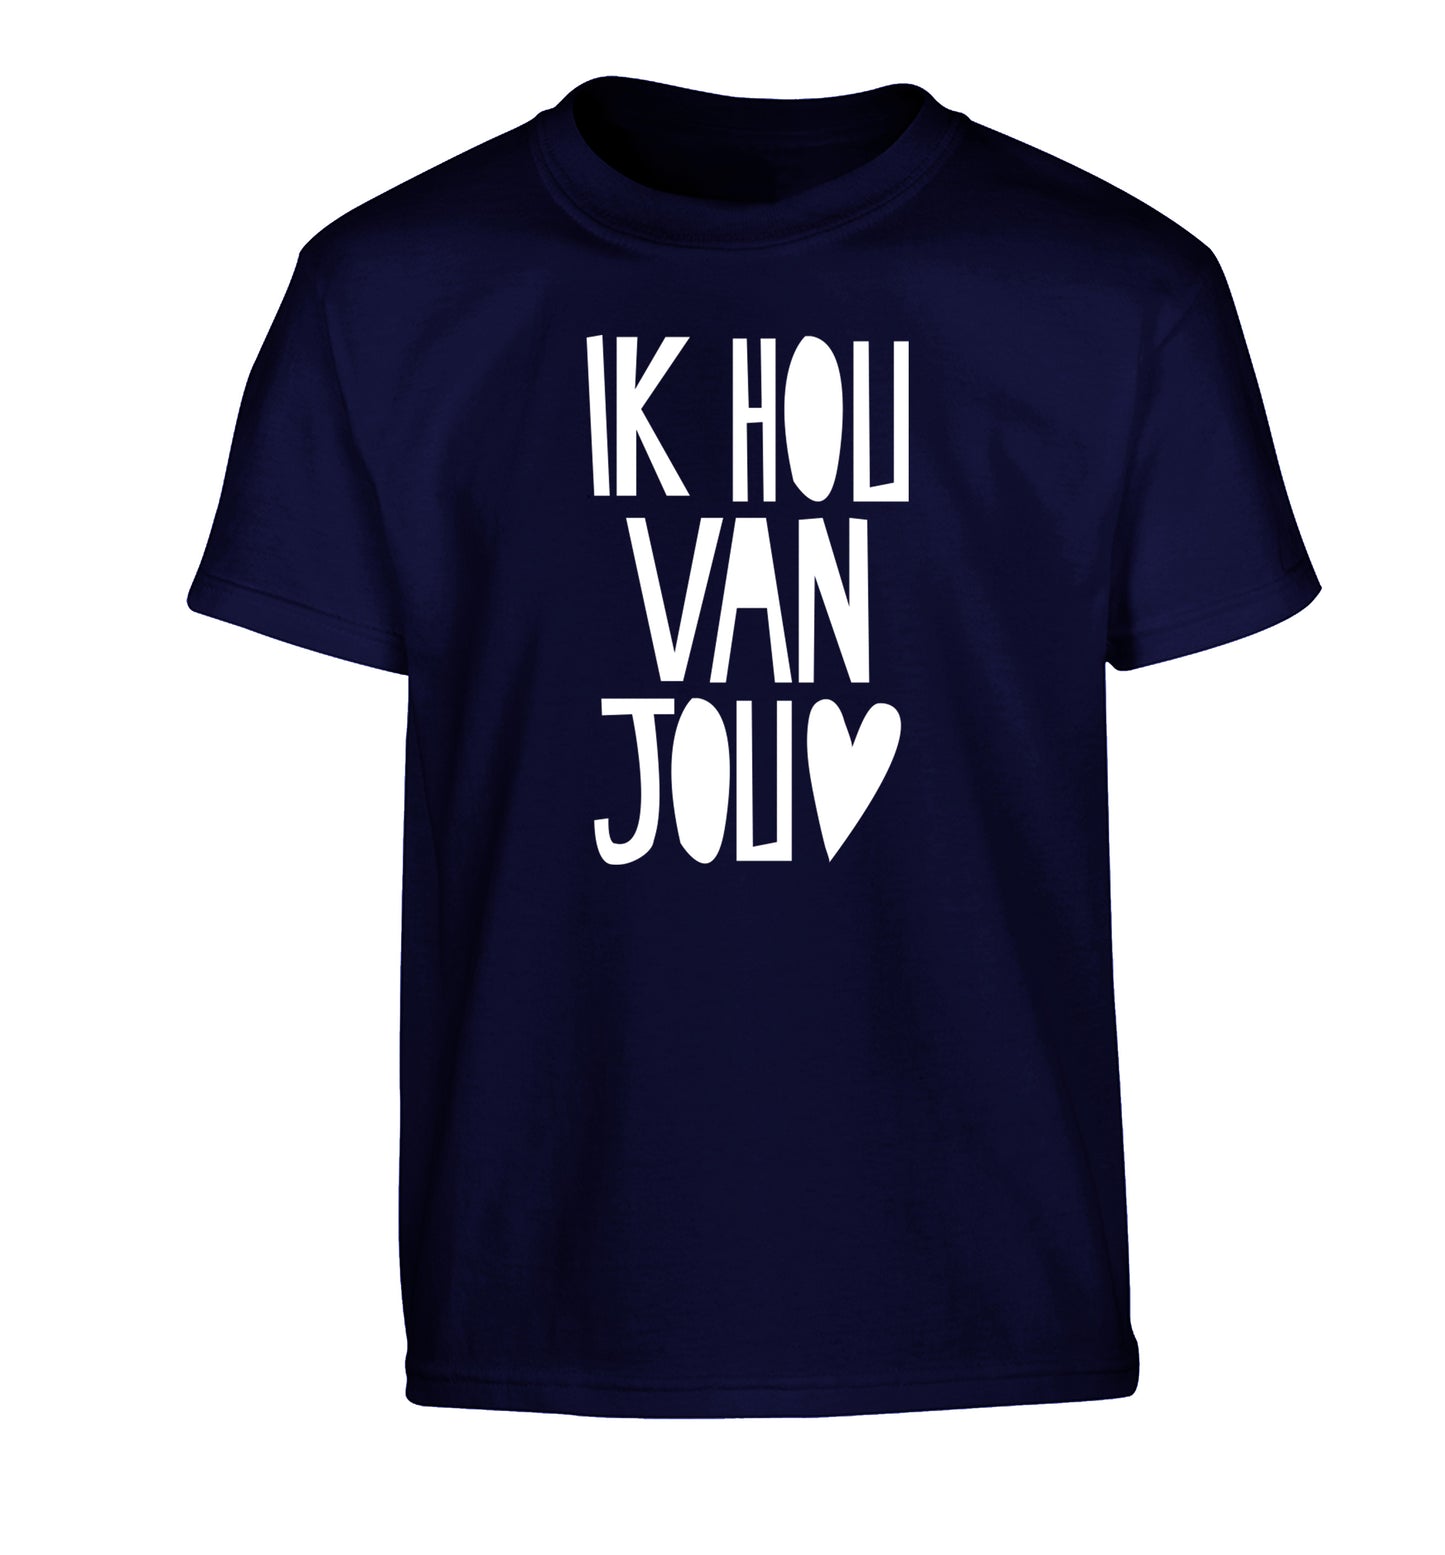 Ik Hau Van Jou - I love you Children's navy Tshirt 12-13 Years